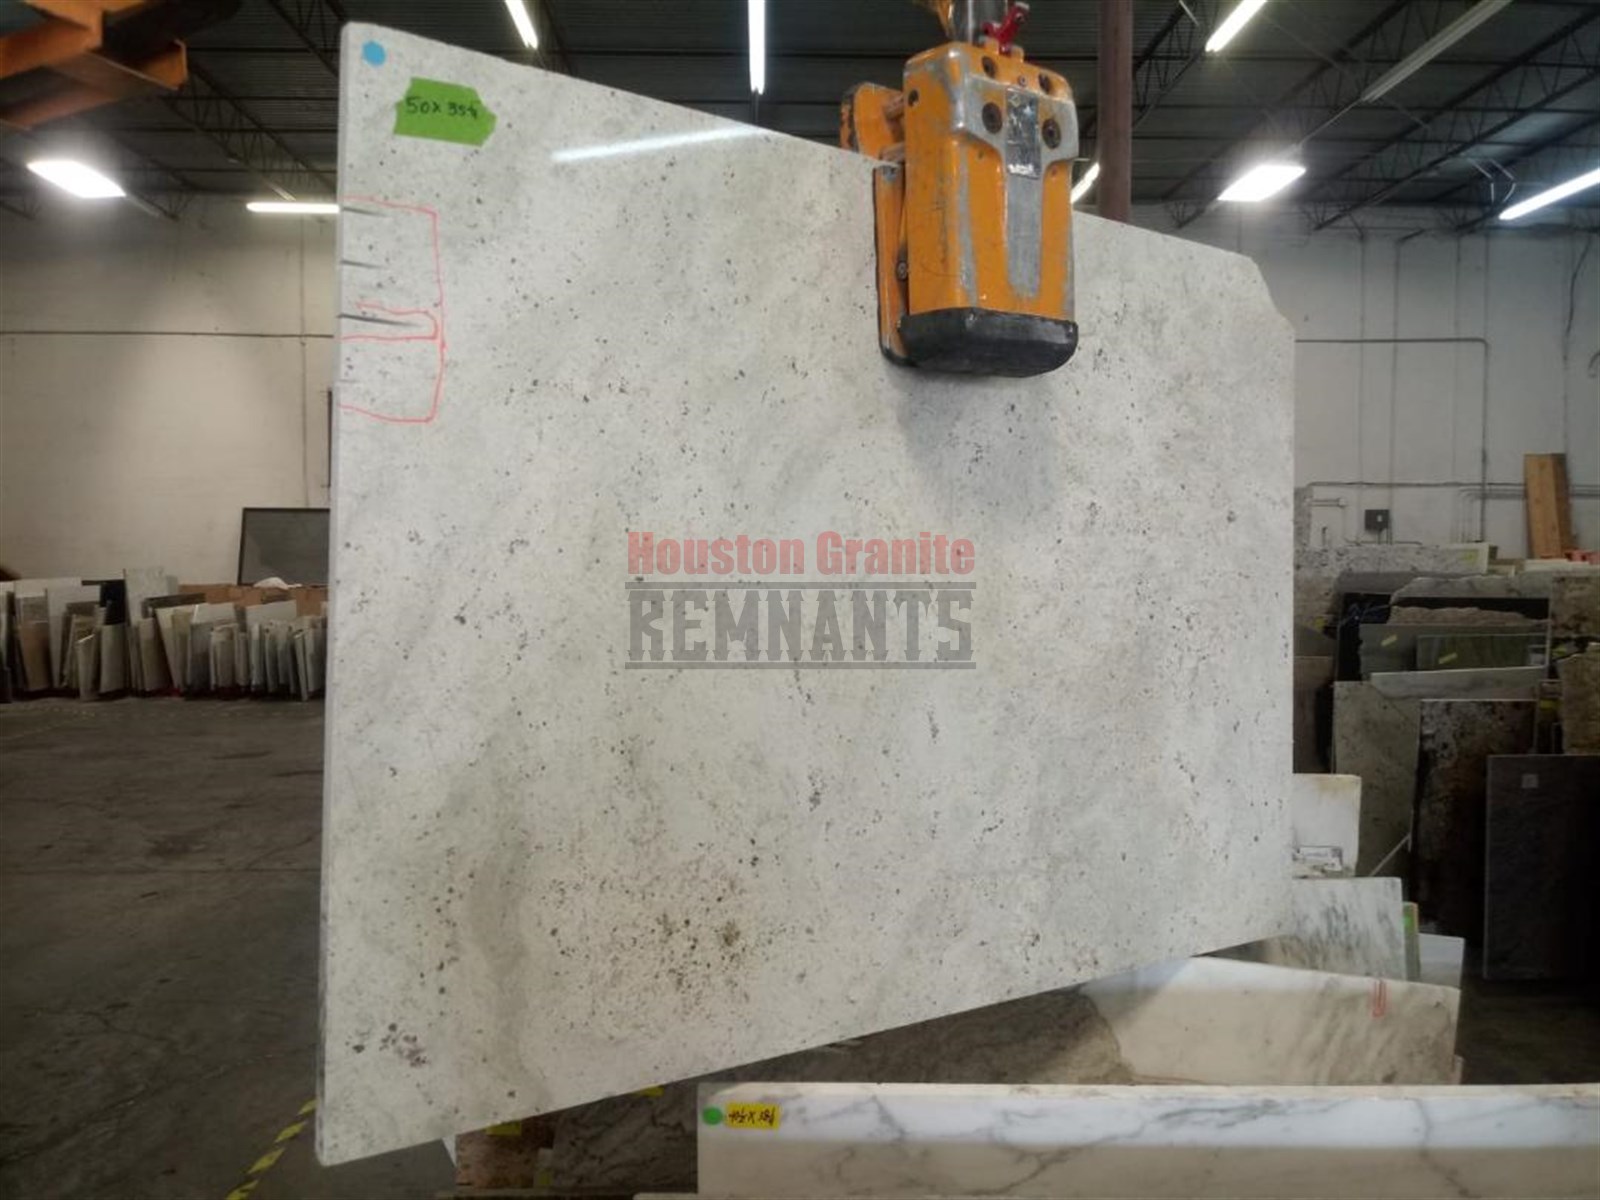 Kashmir White Granite Remnant 50